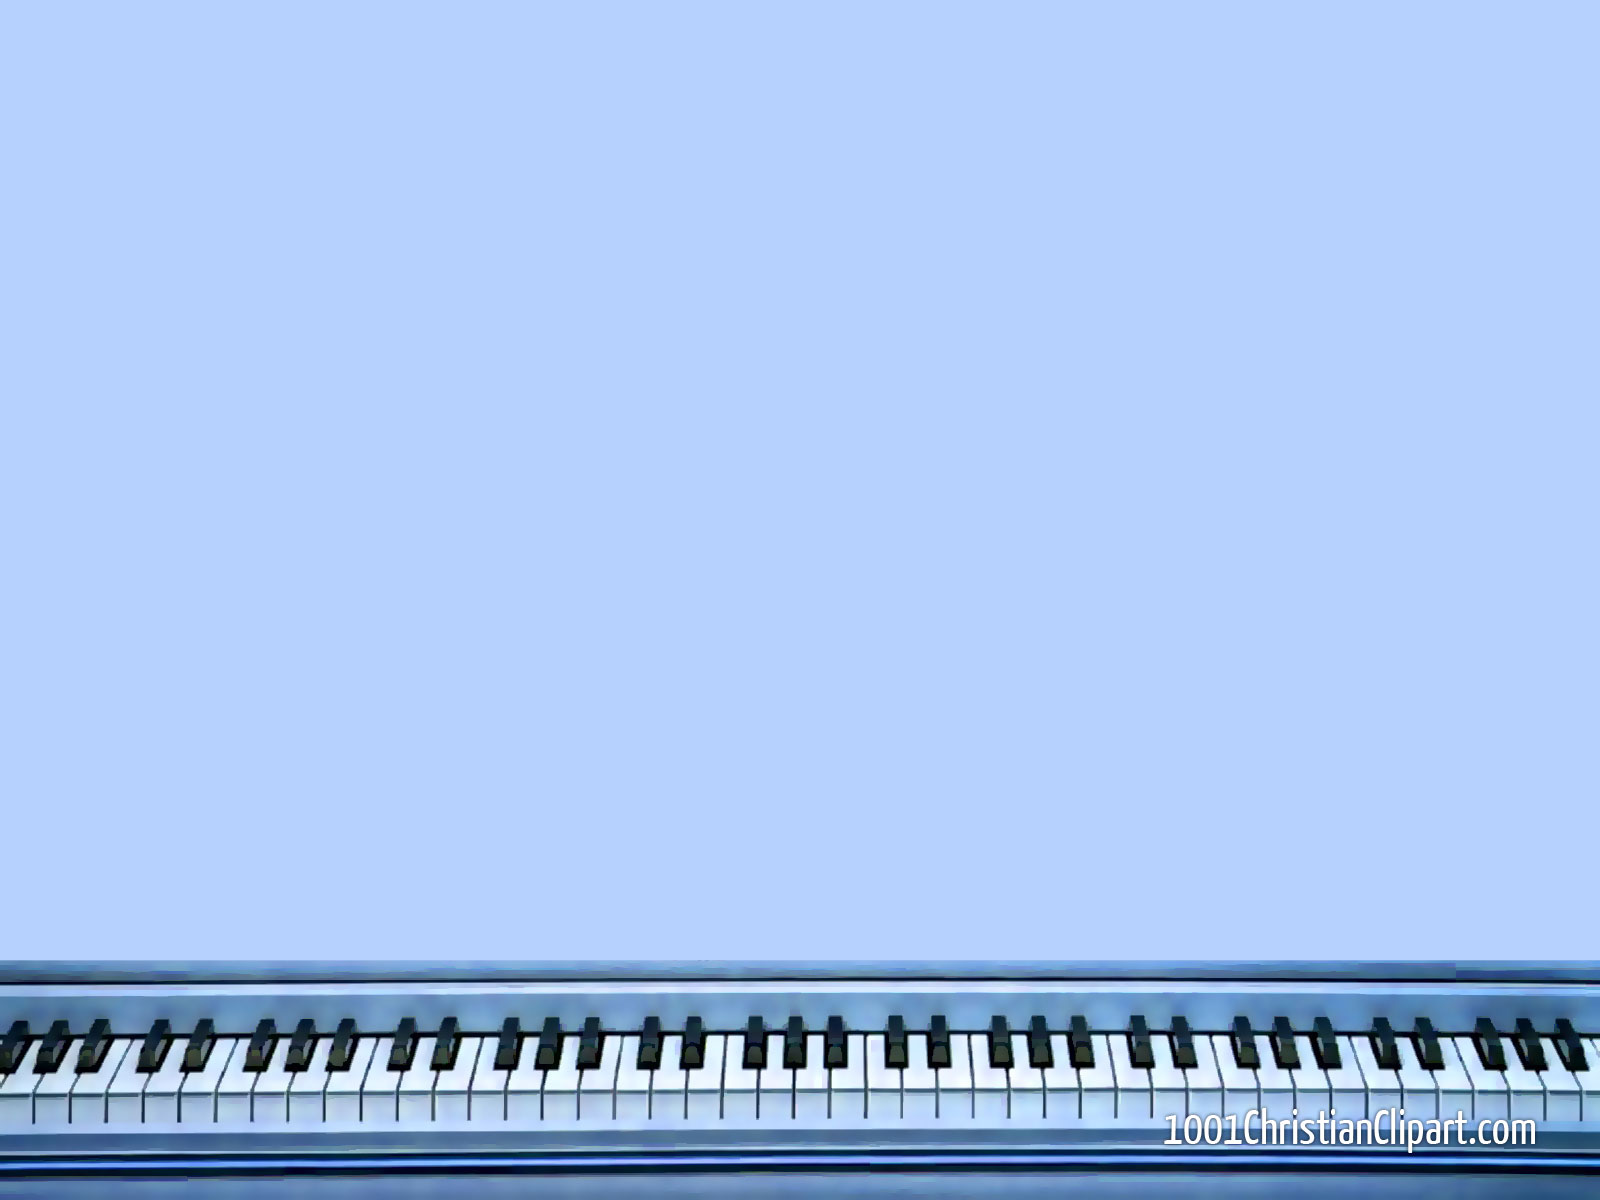 Blue Piano theme, for PowerPoint backgrounds, desktop wallpaper, 